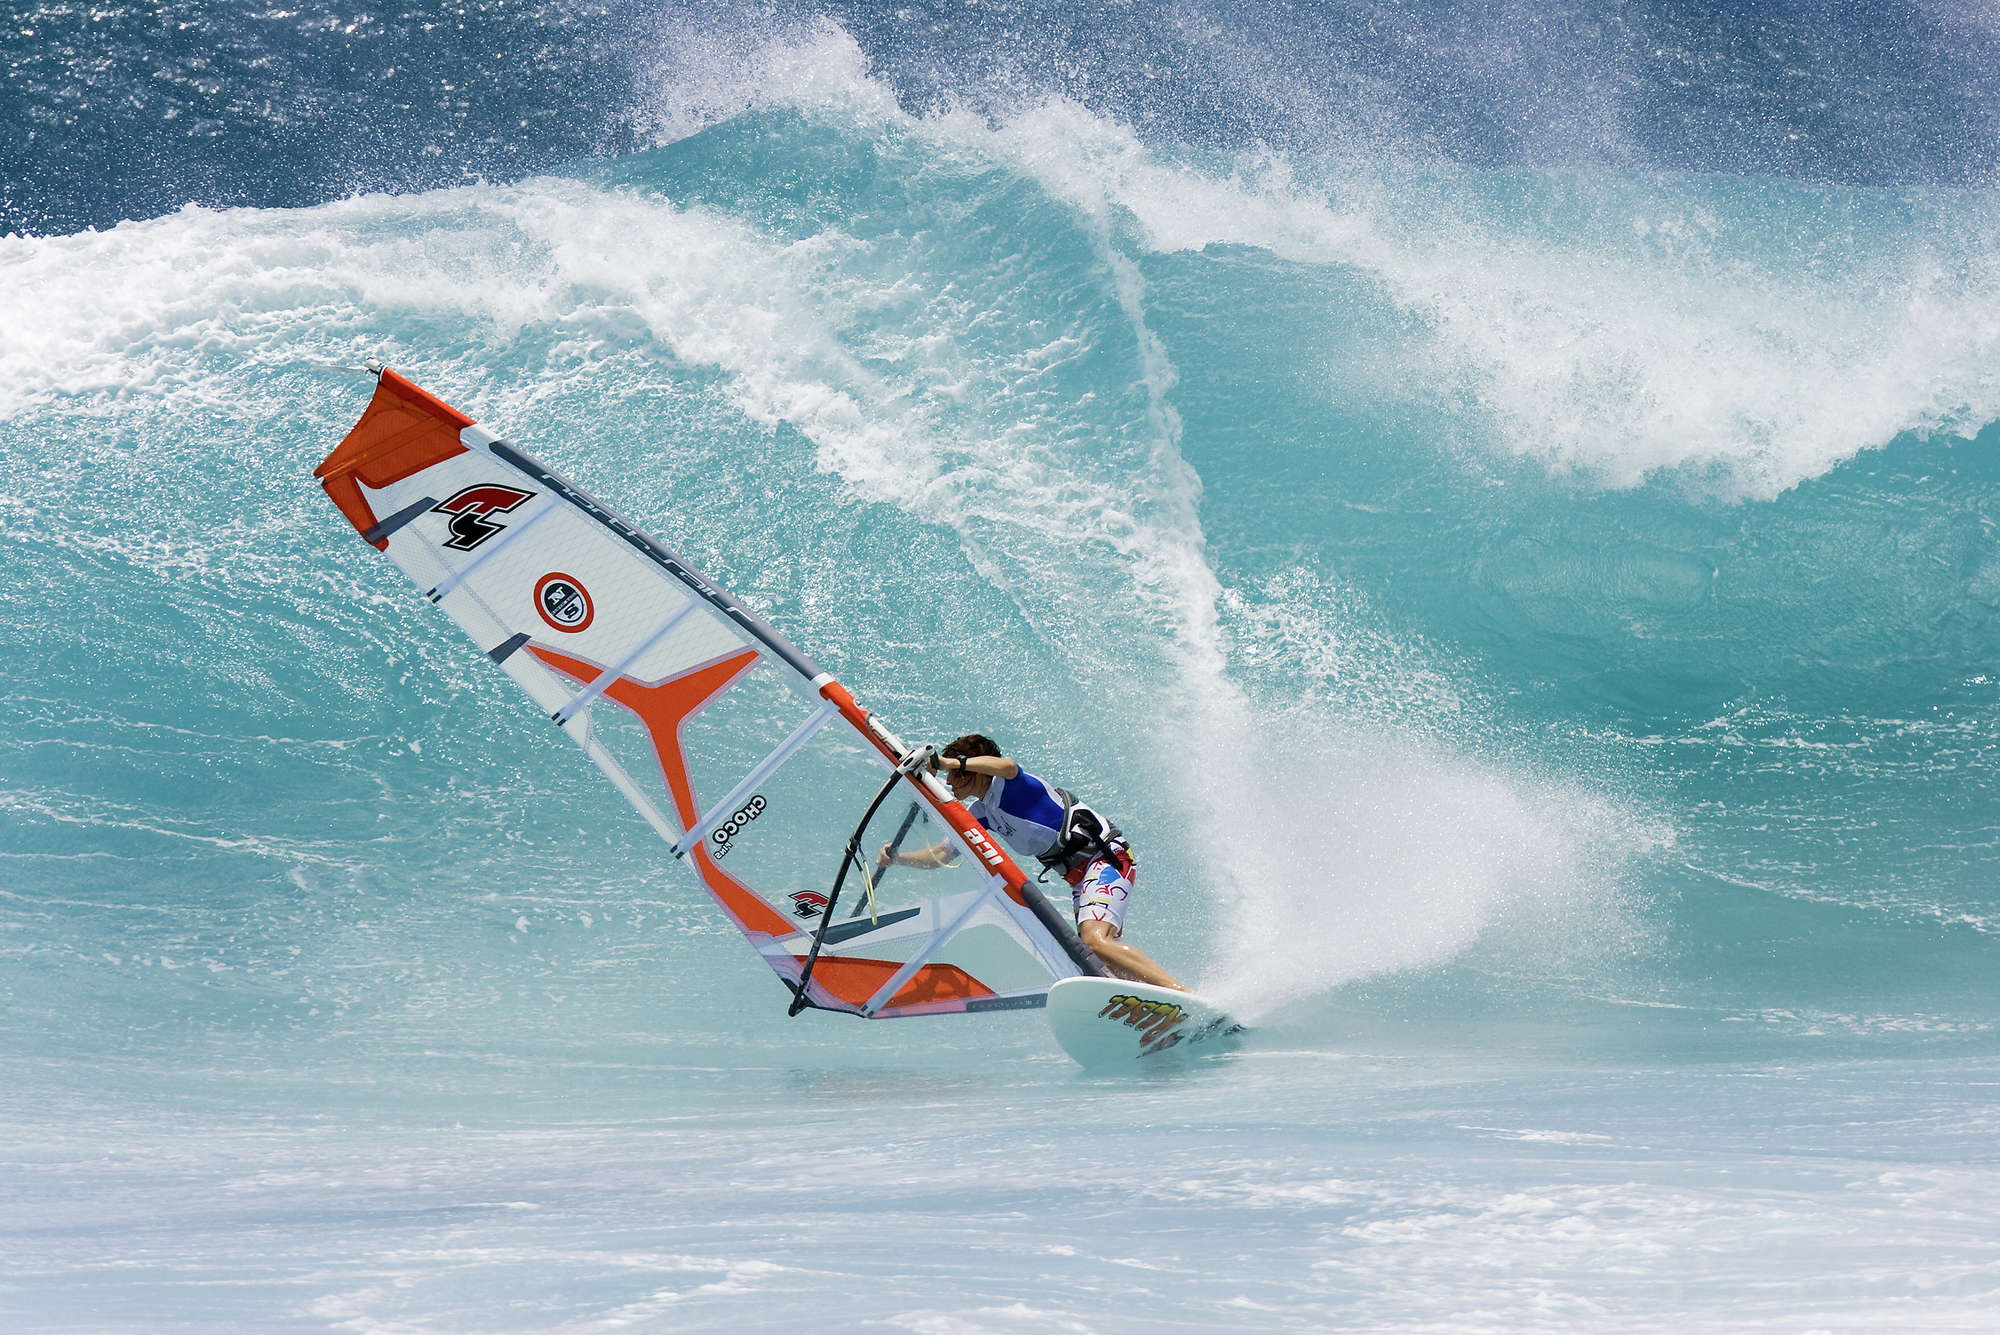             Fototapete Meer mit Surfer – Mattes Glattvlies
        